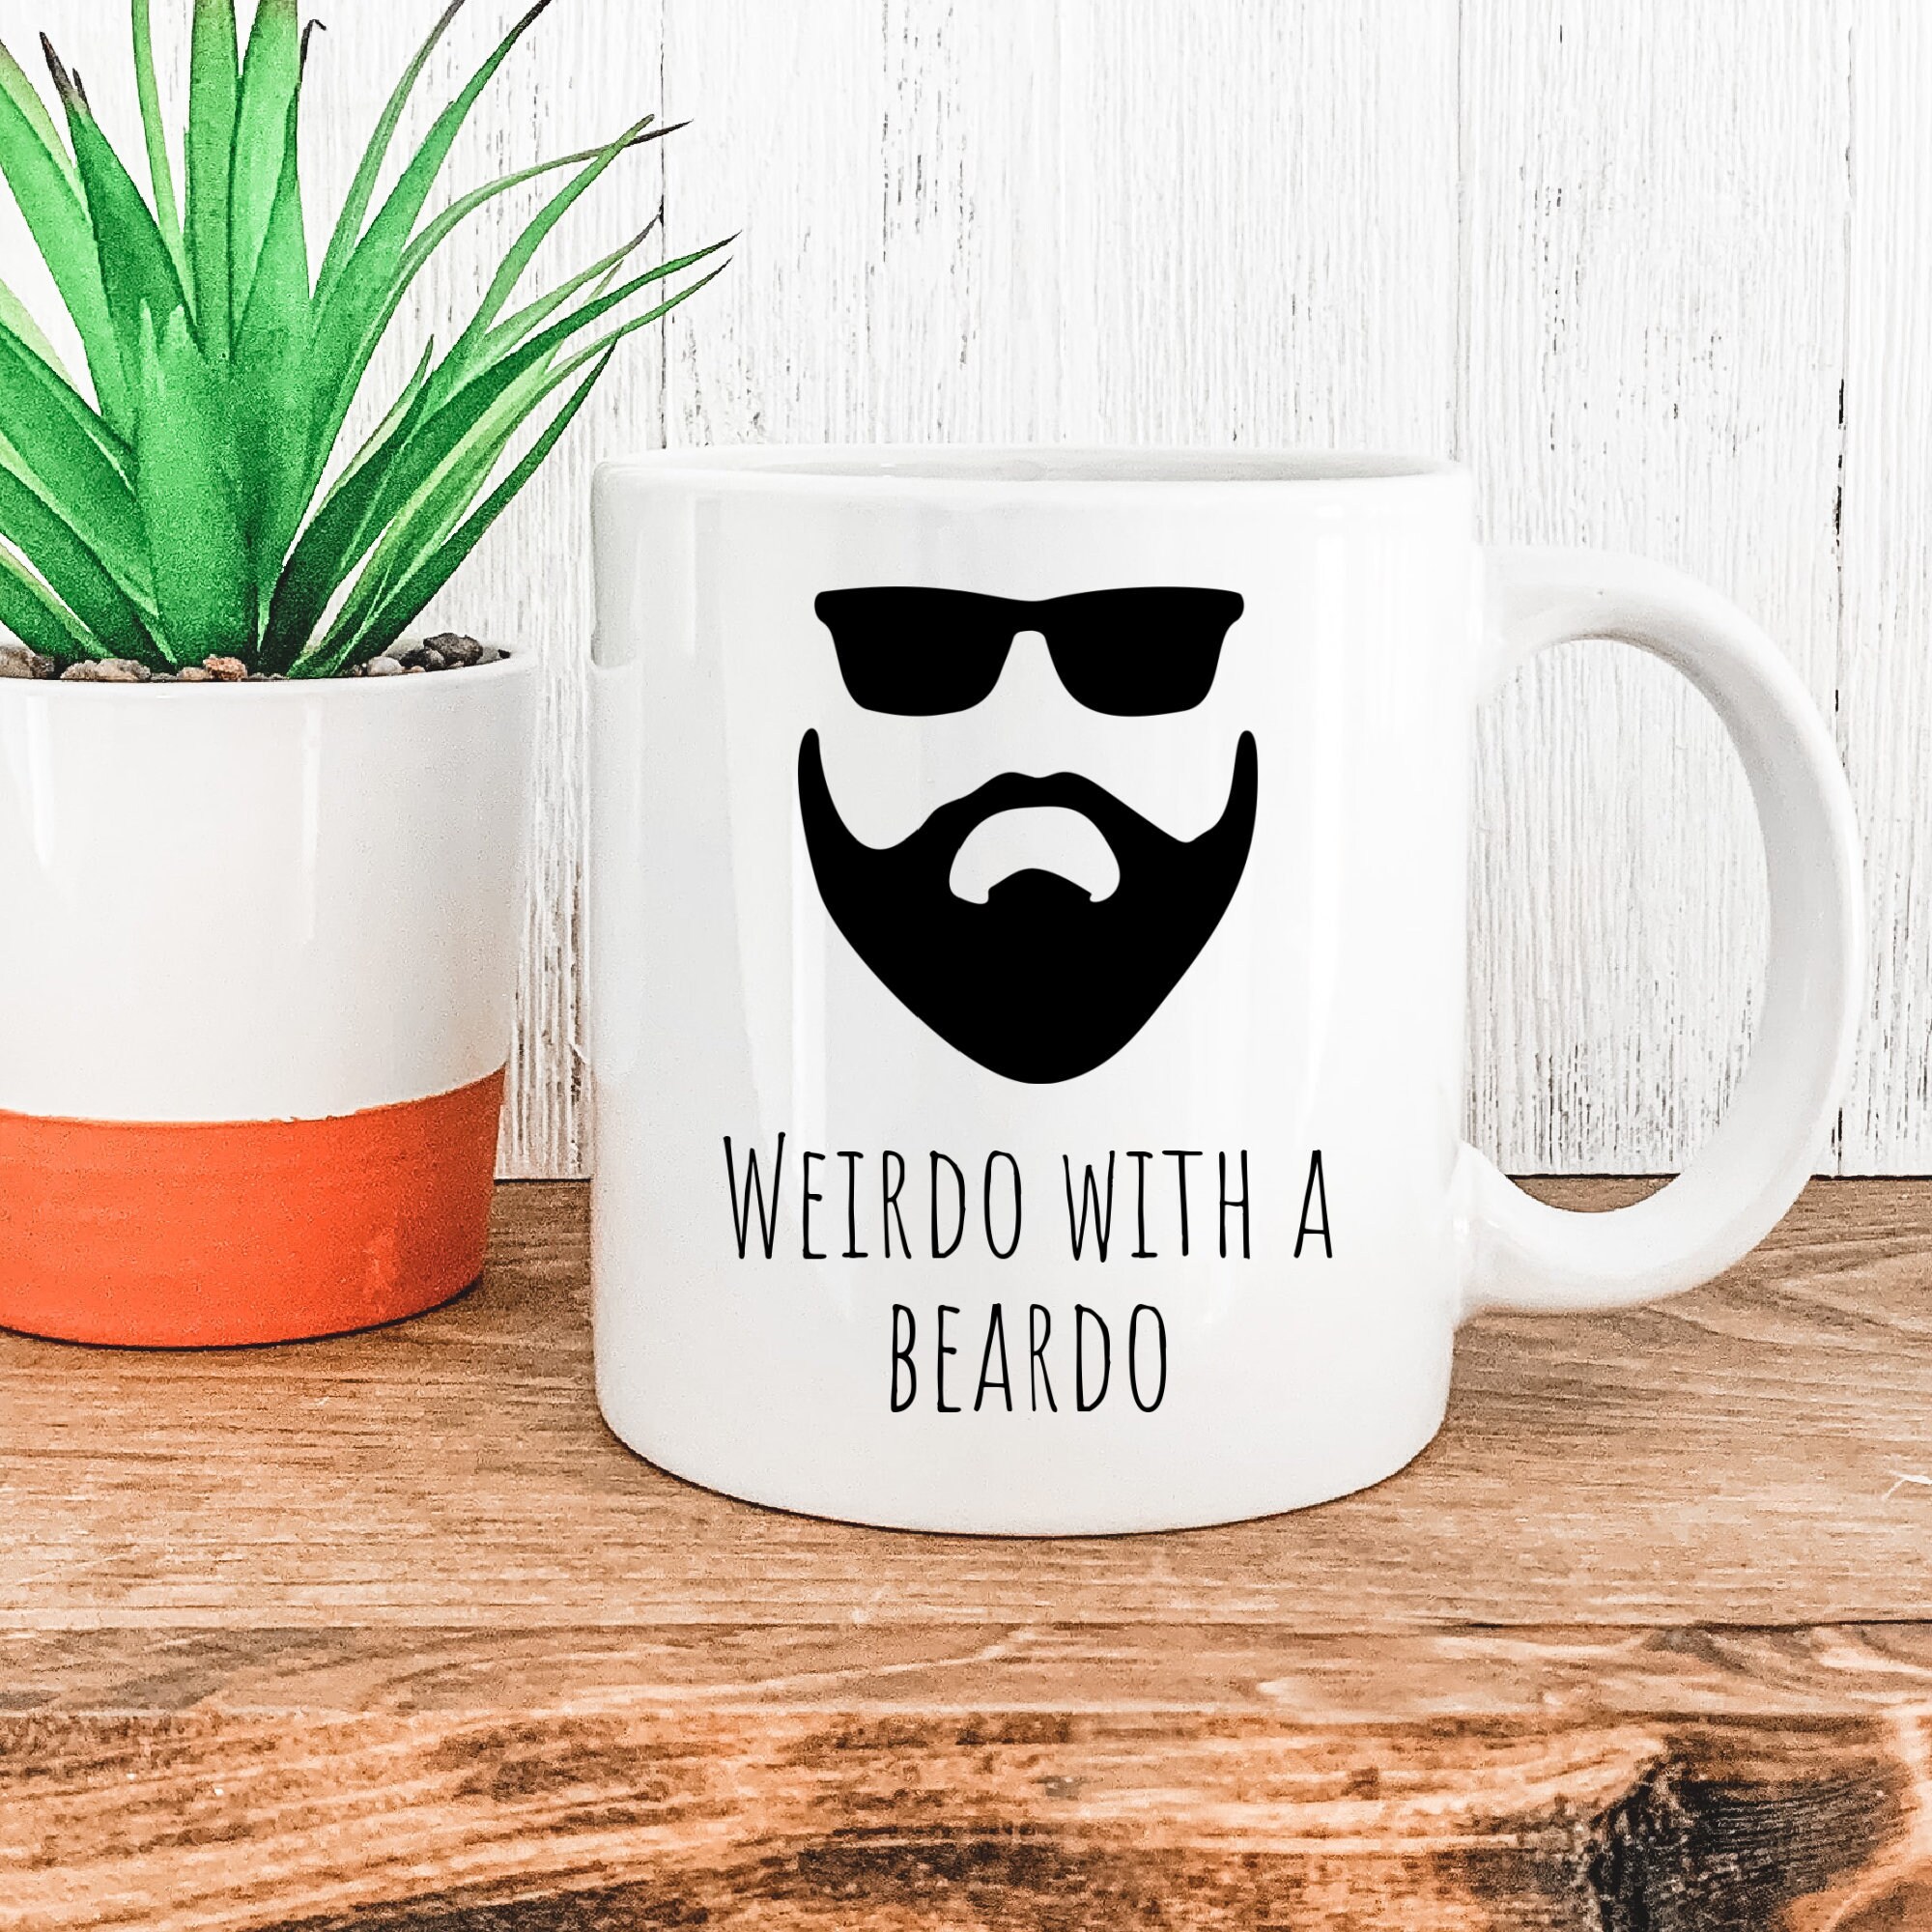 Funny Coffee Mug for Men - Beardiful Men - 11oz and 15oz Funny